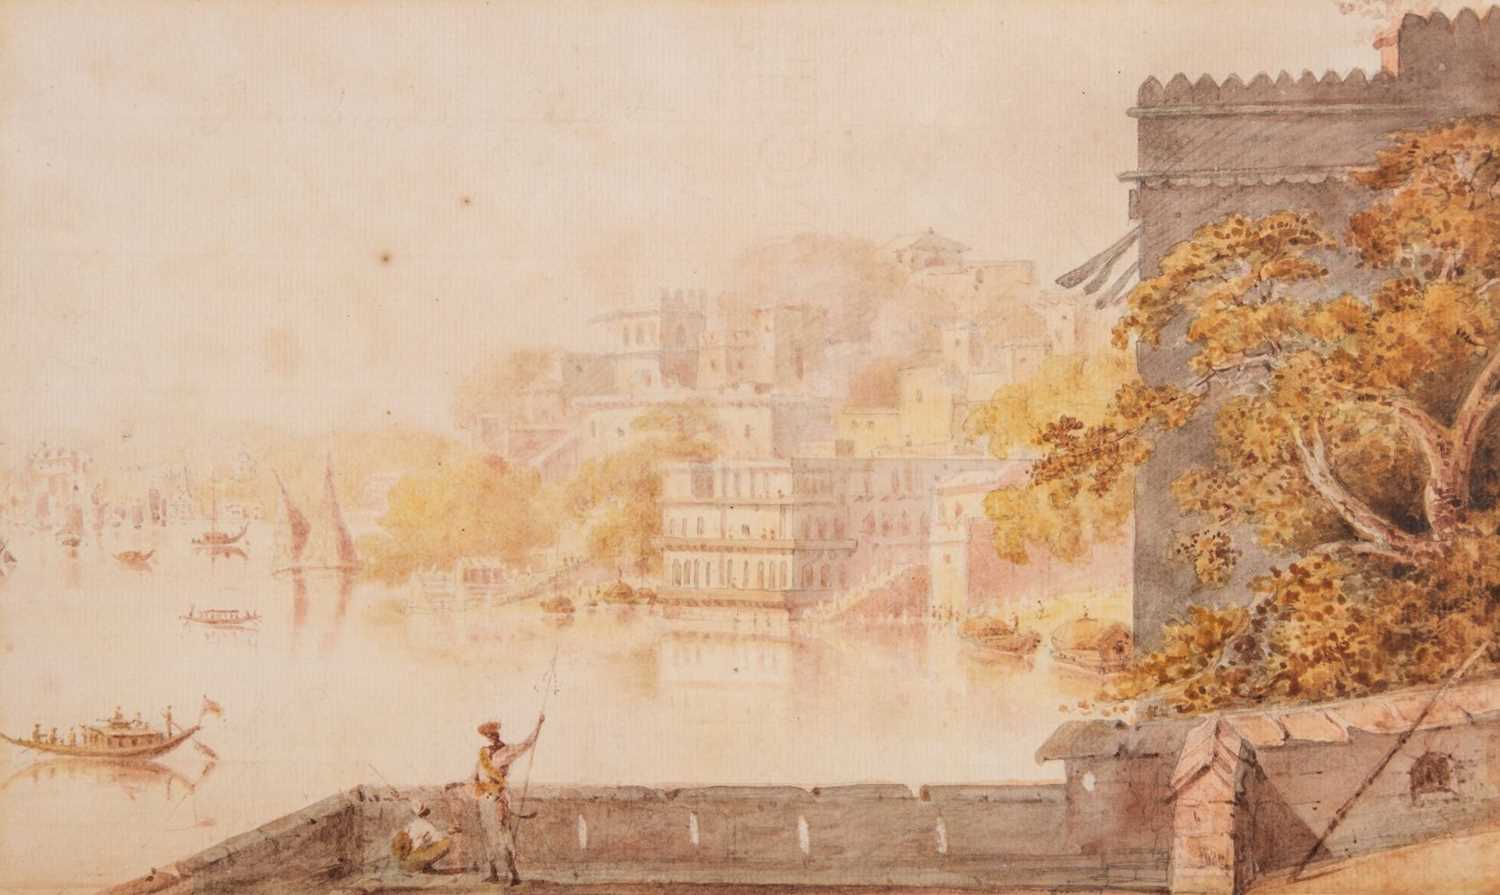 Lot 30 - India. River scene, possibly Varanasi, c.1806, original watercolour